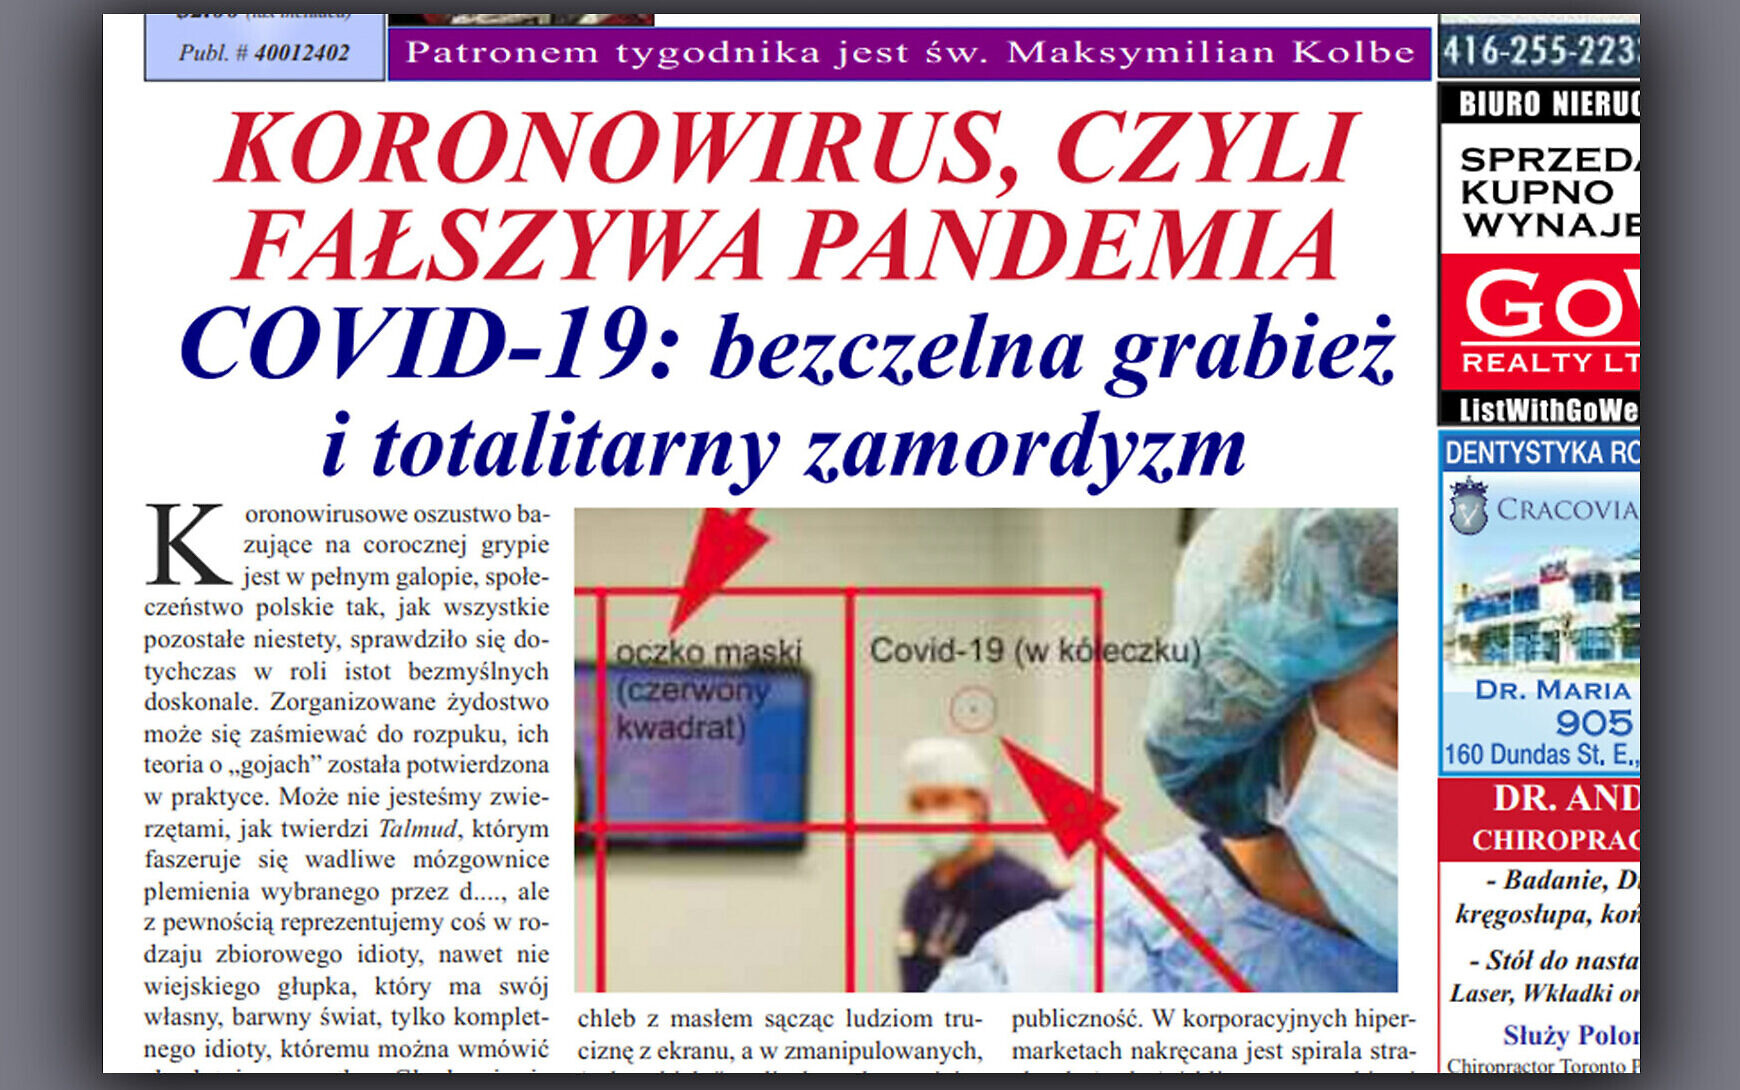 Polish Language Newspaper In Toronto Blames Jews For Coronavirus Pandemic The Times Of Israel